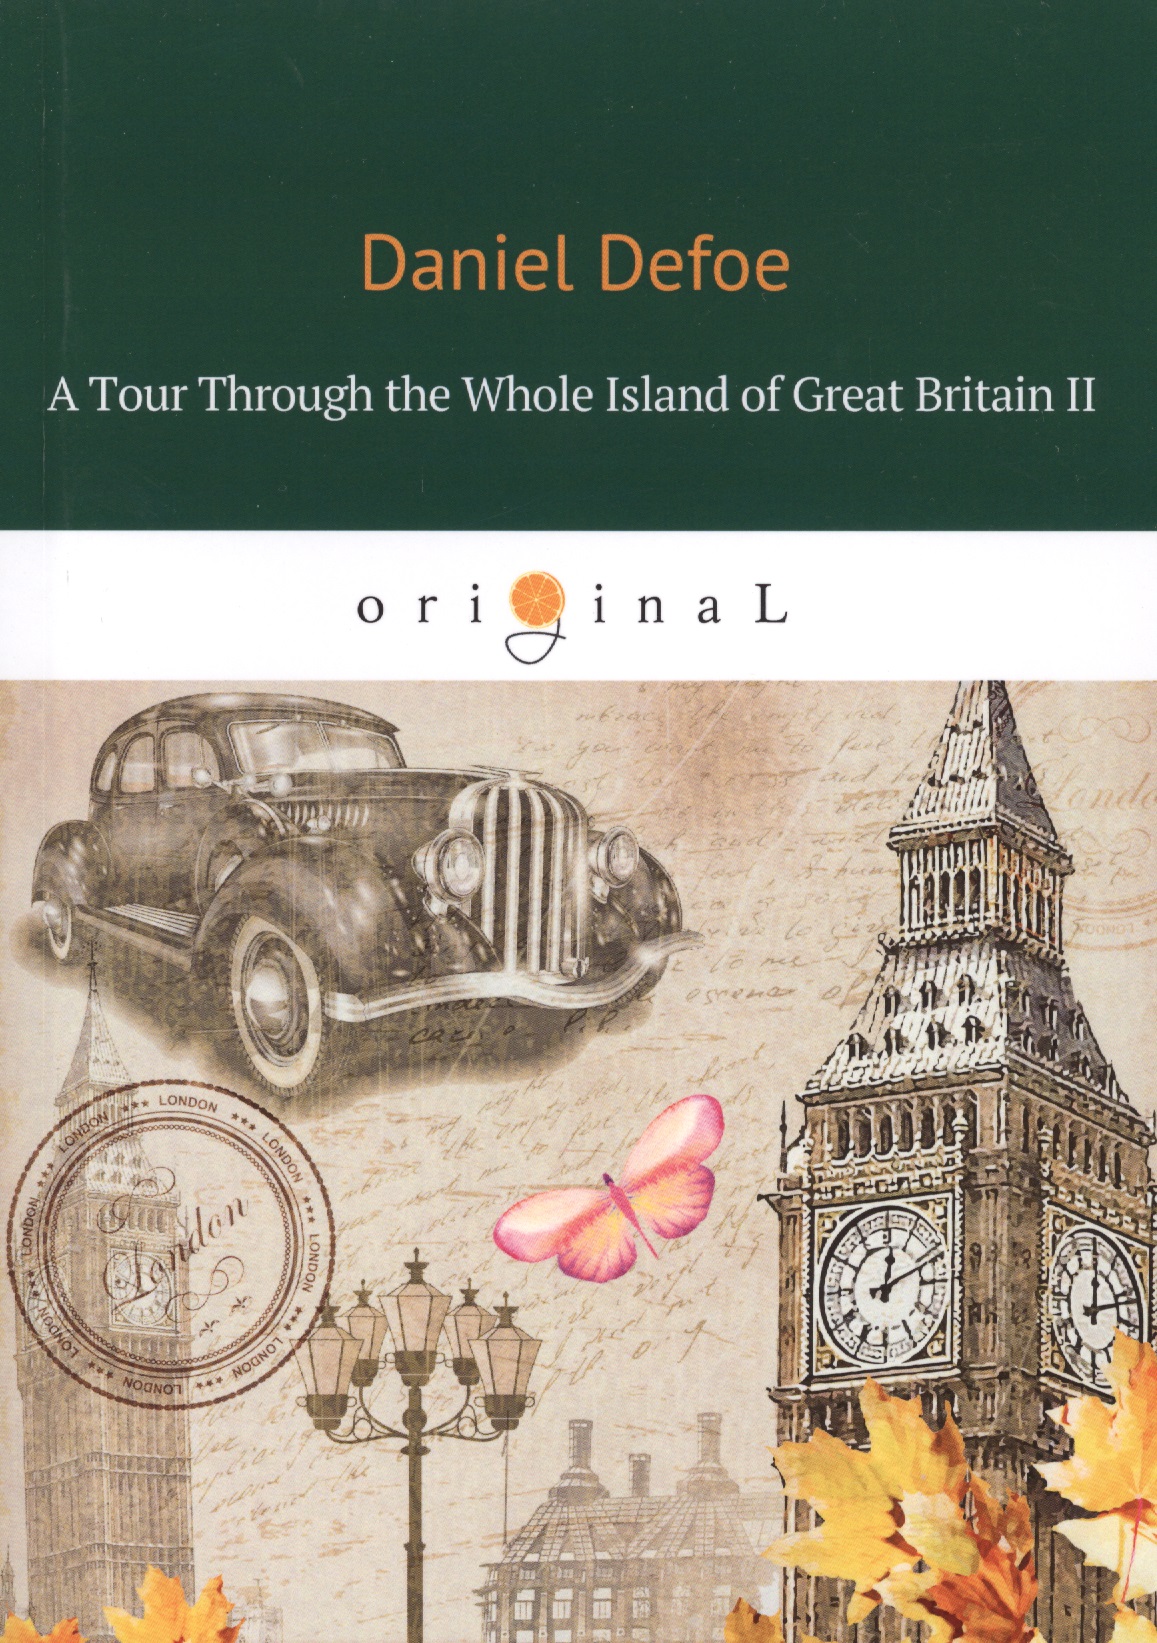 Дефо Даниель - A Tour Through the Whole Island of Great Britain II = Тур через Великобританию 2: на англ.яз